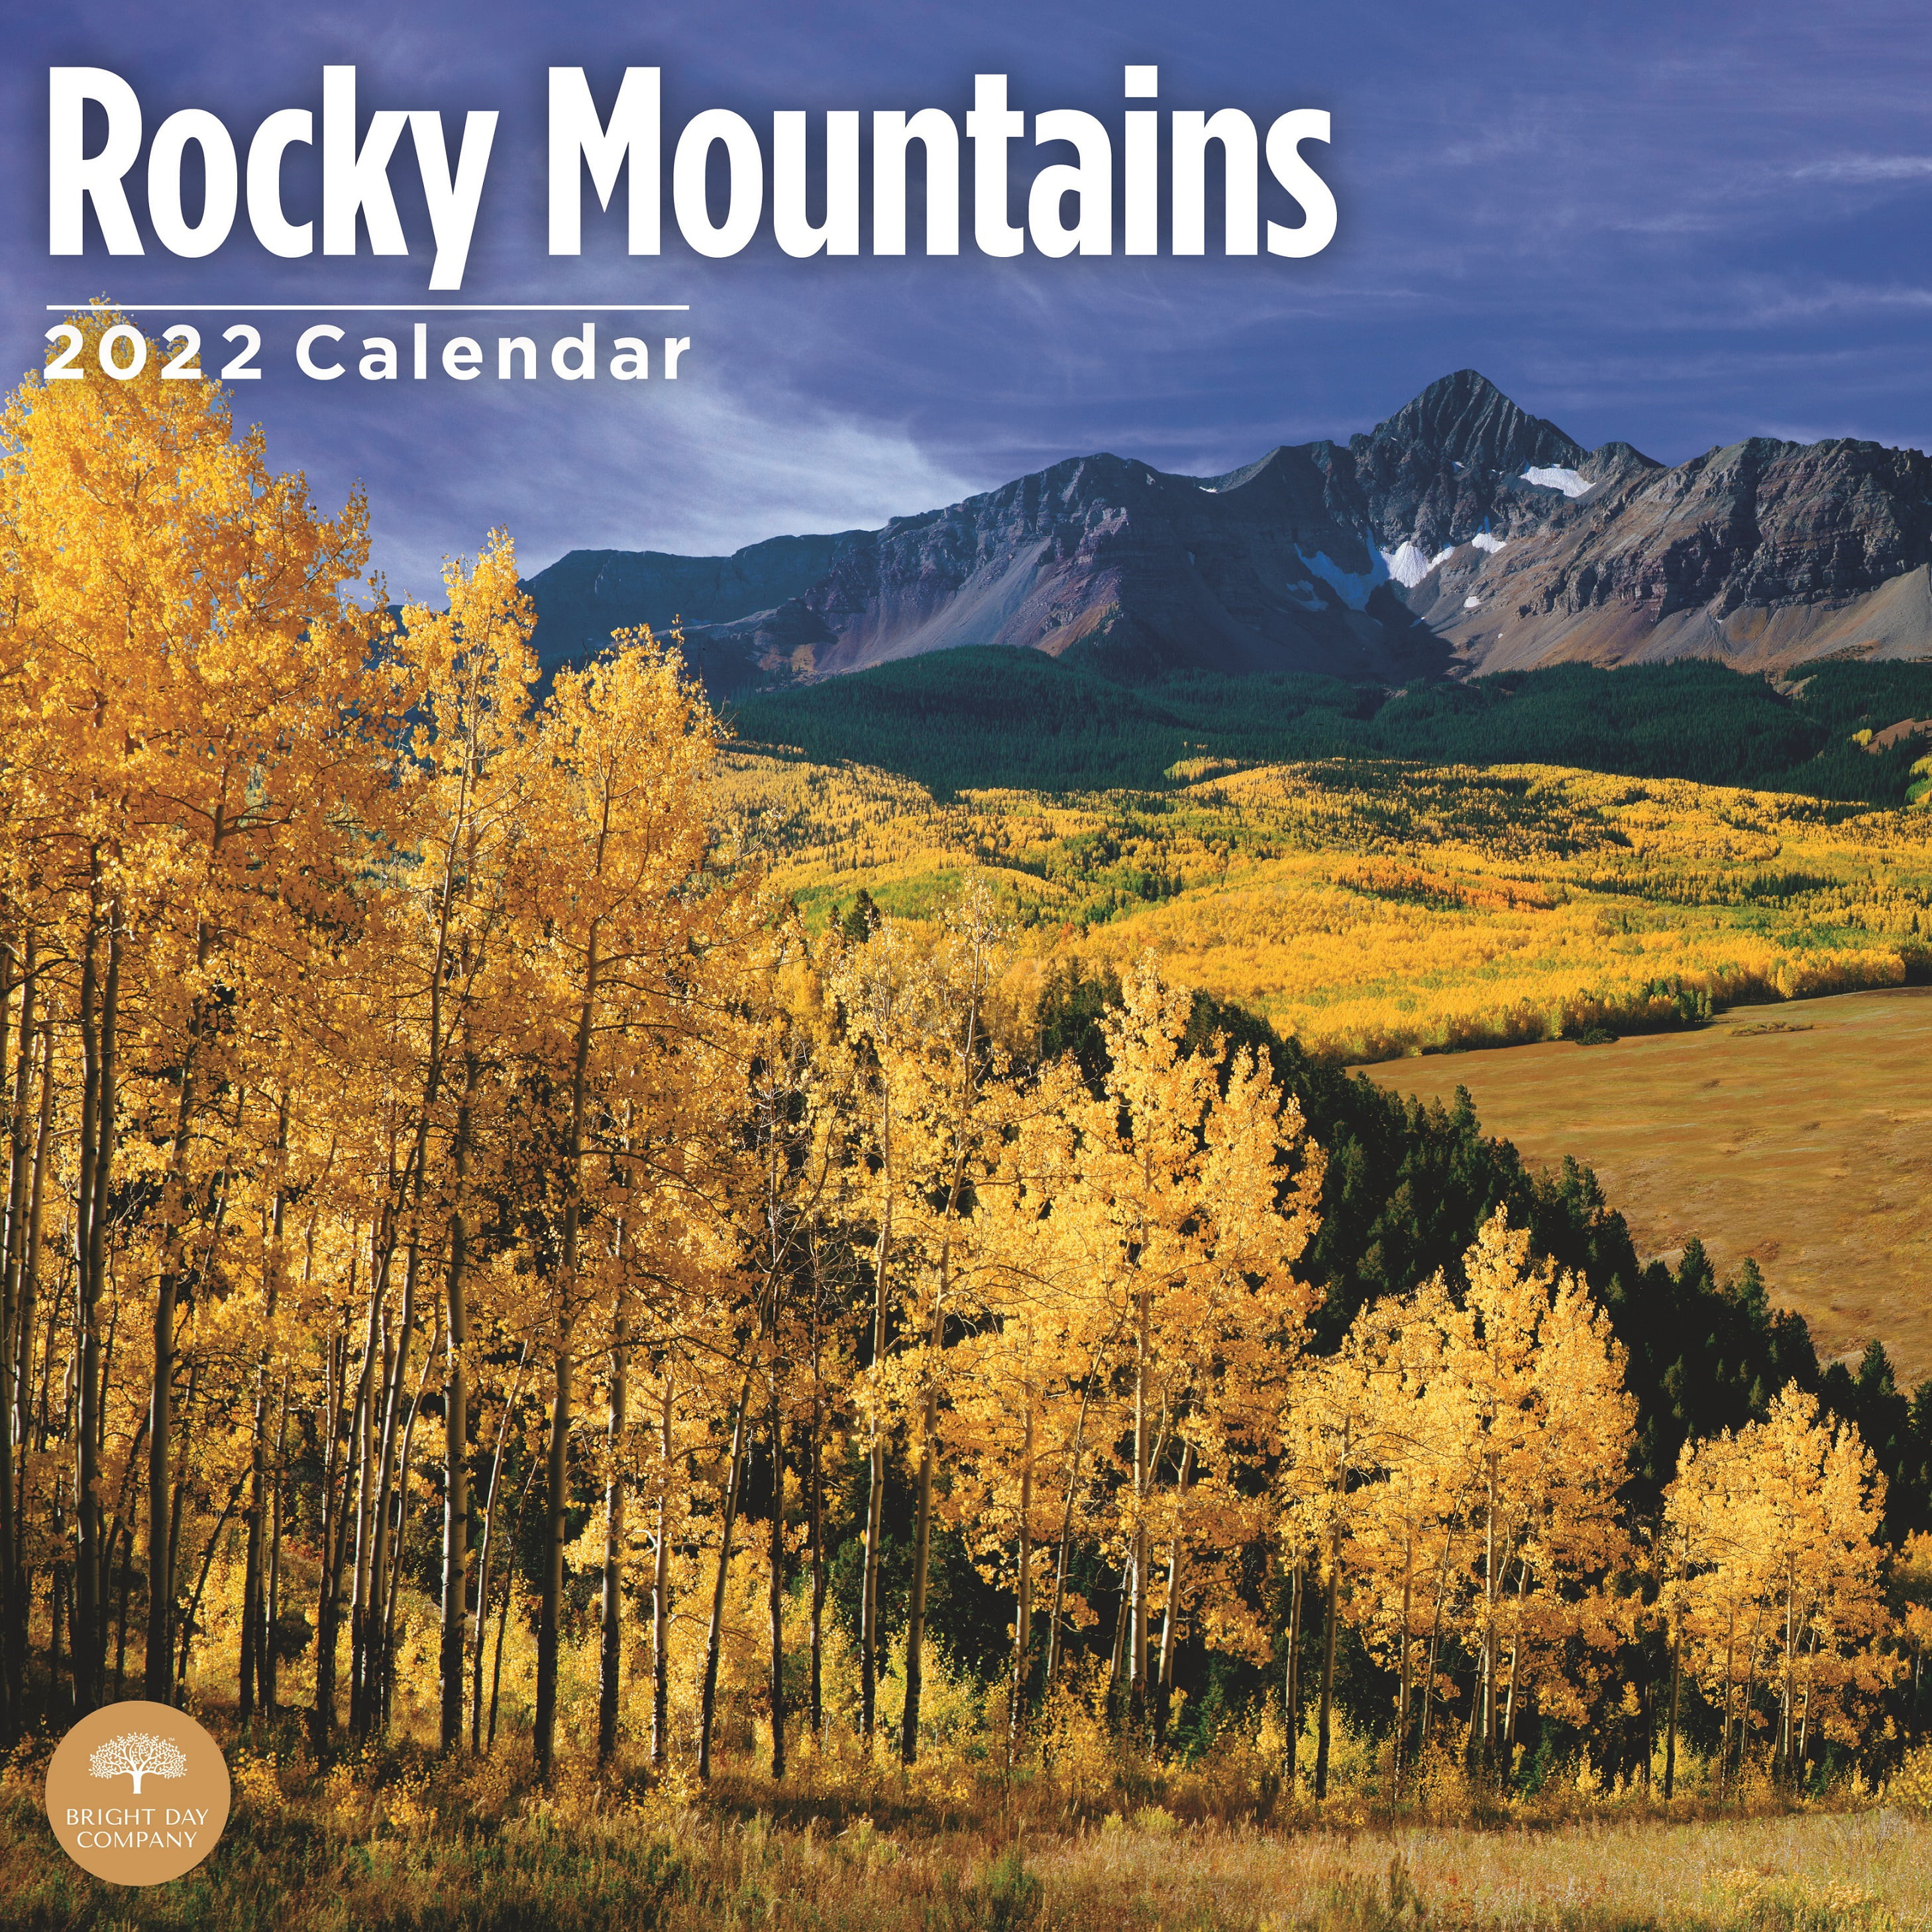 Cu Boulder Fall 2022 Calendar 2022 Rocky Mountains Wall Calendar By Bright Day, 12 X 12 Inch - Walmart.com